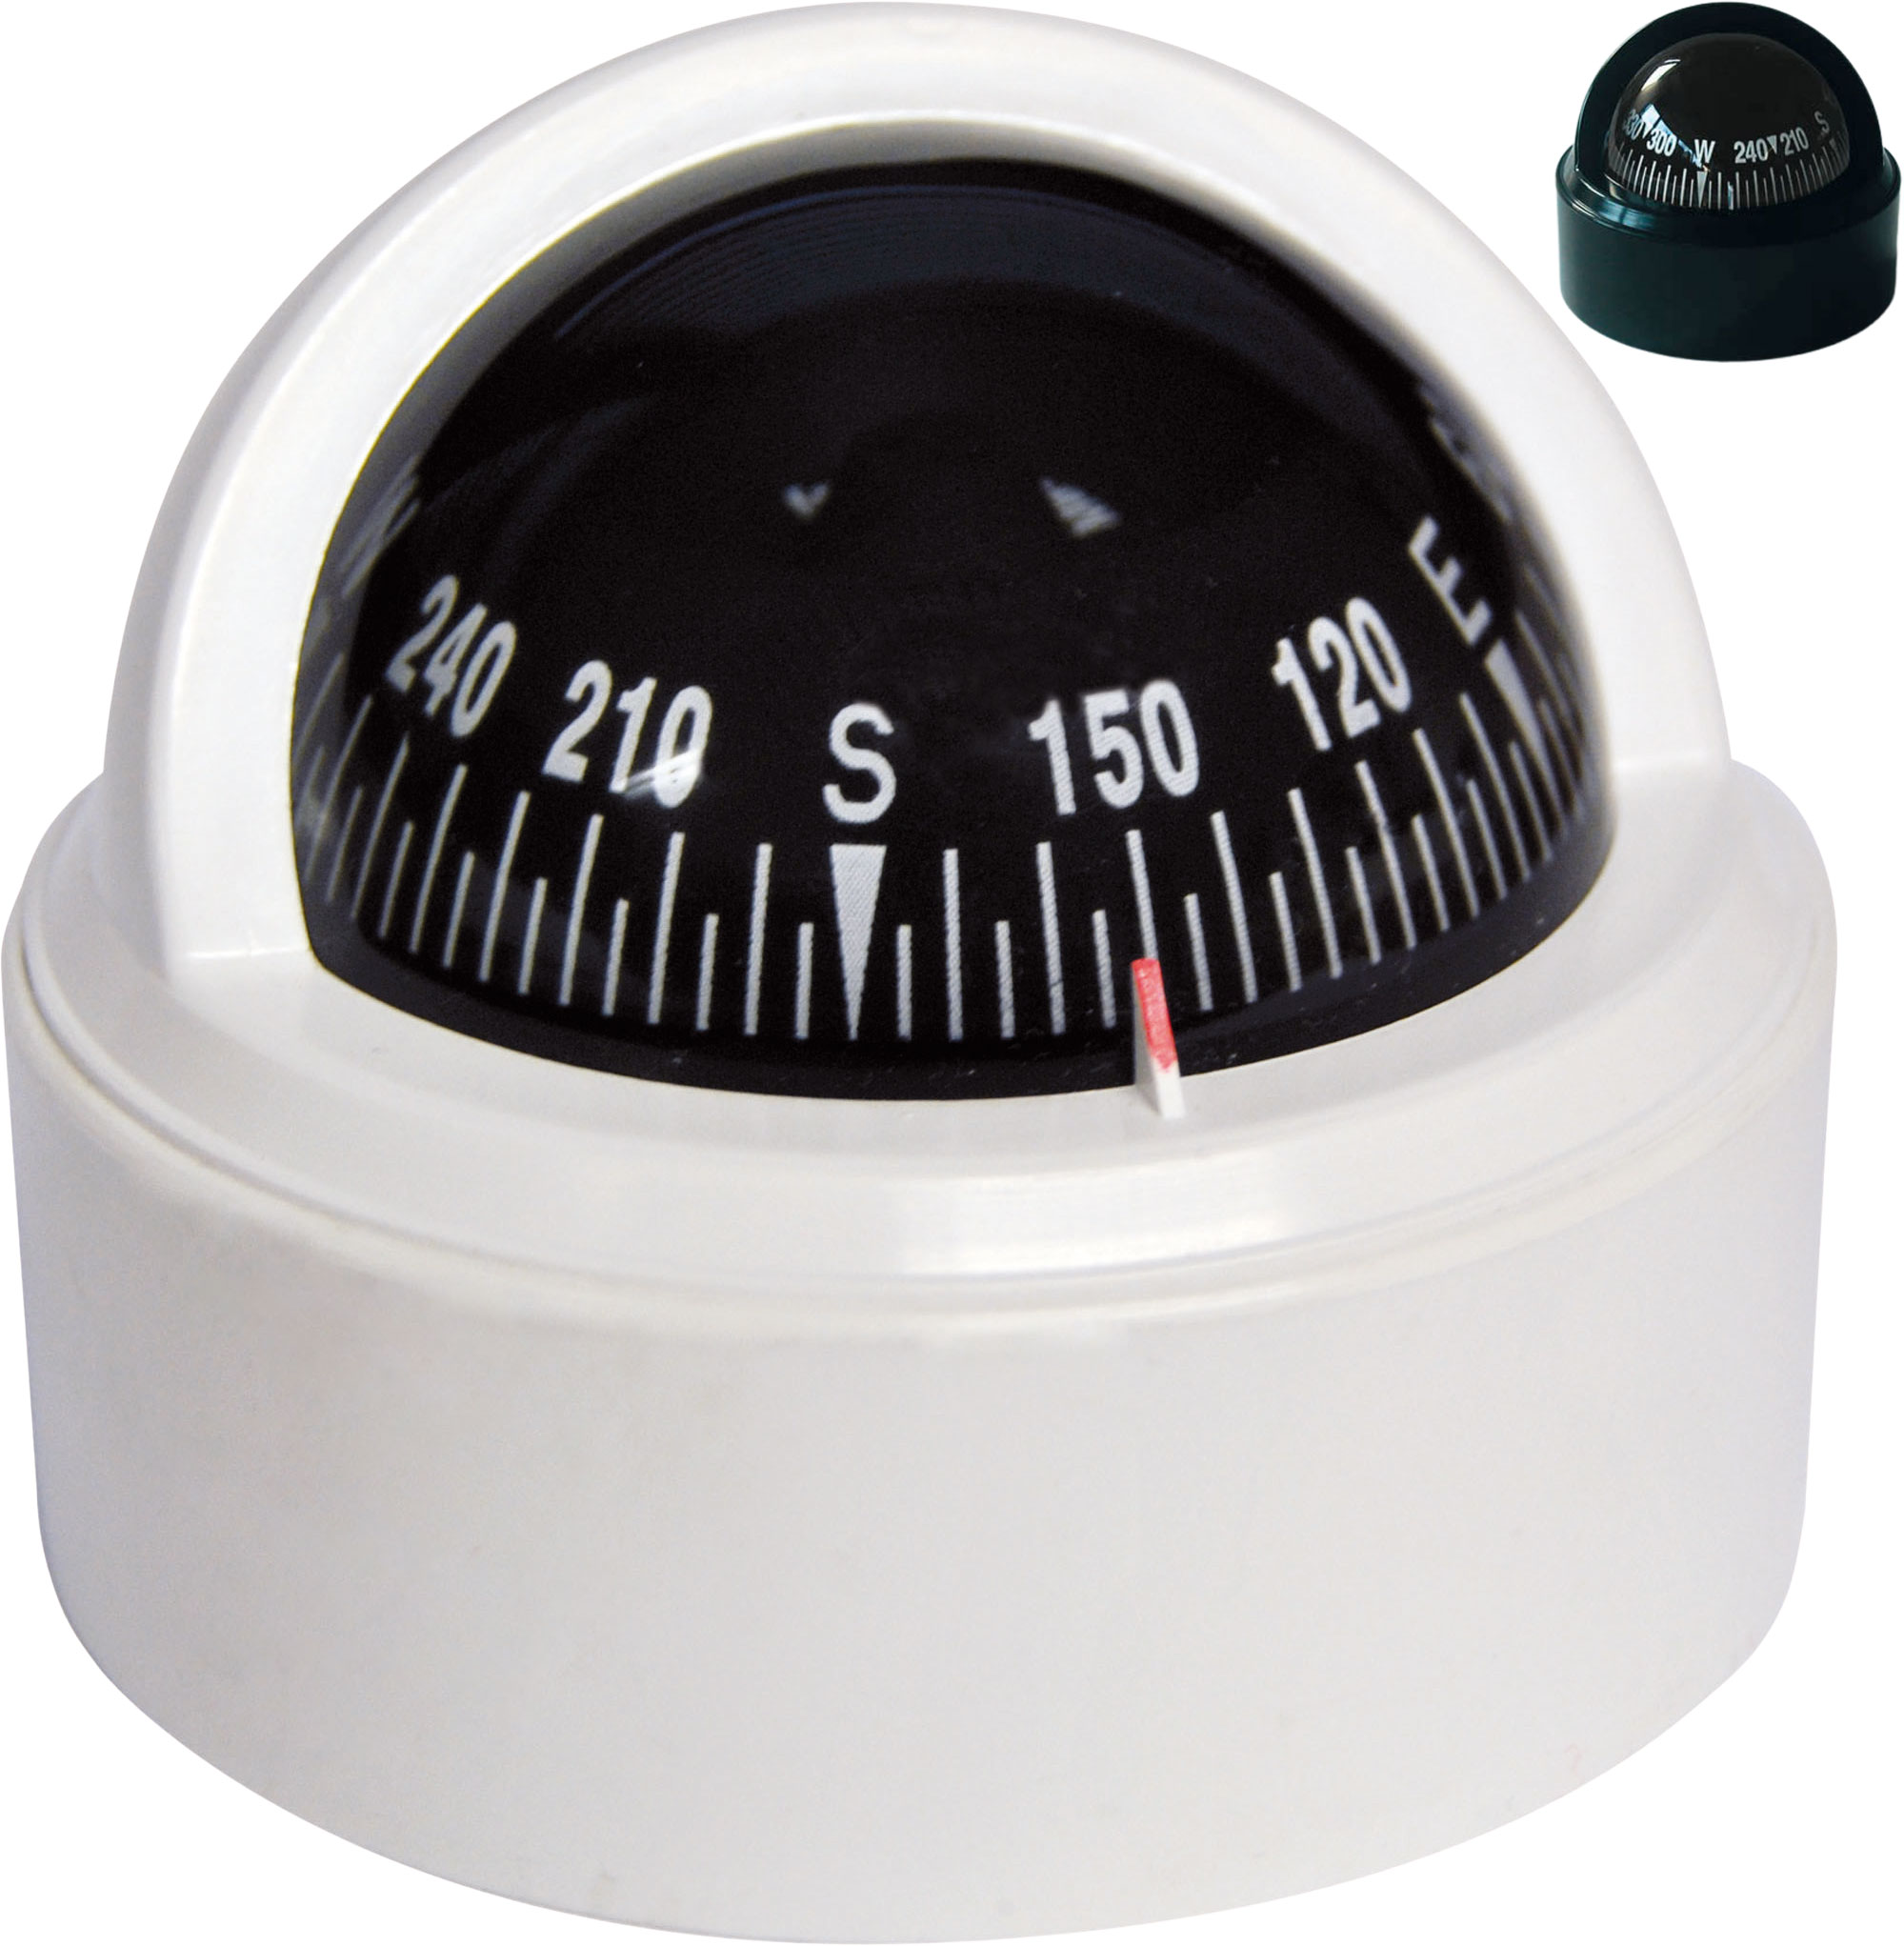 Riviera Stella BS1 kompass med minipidestall